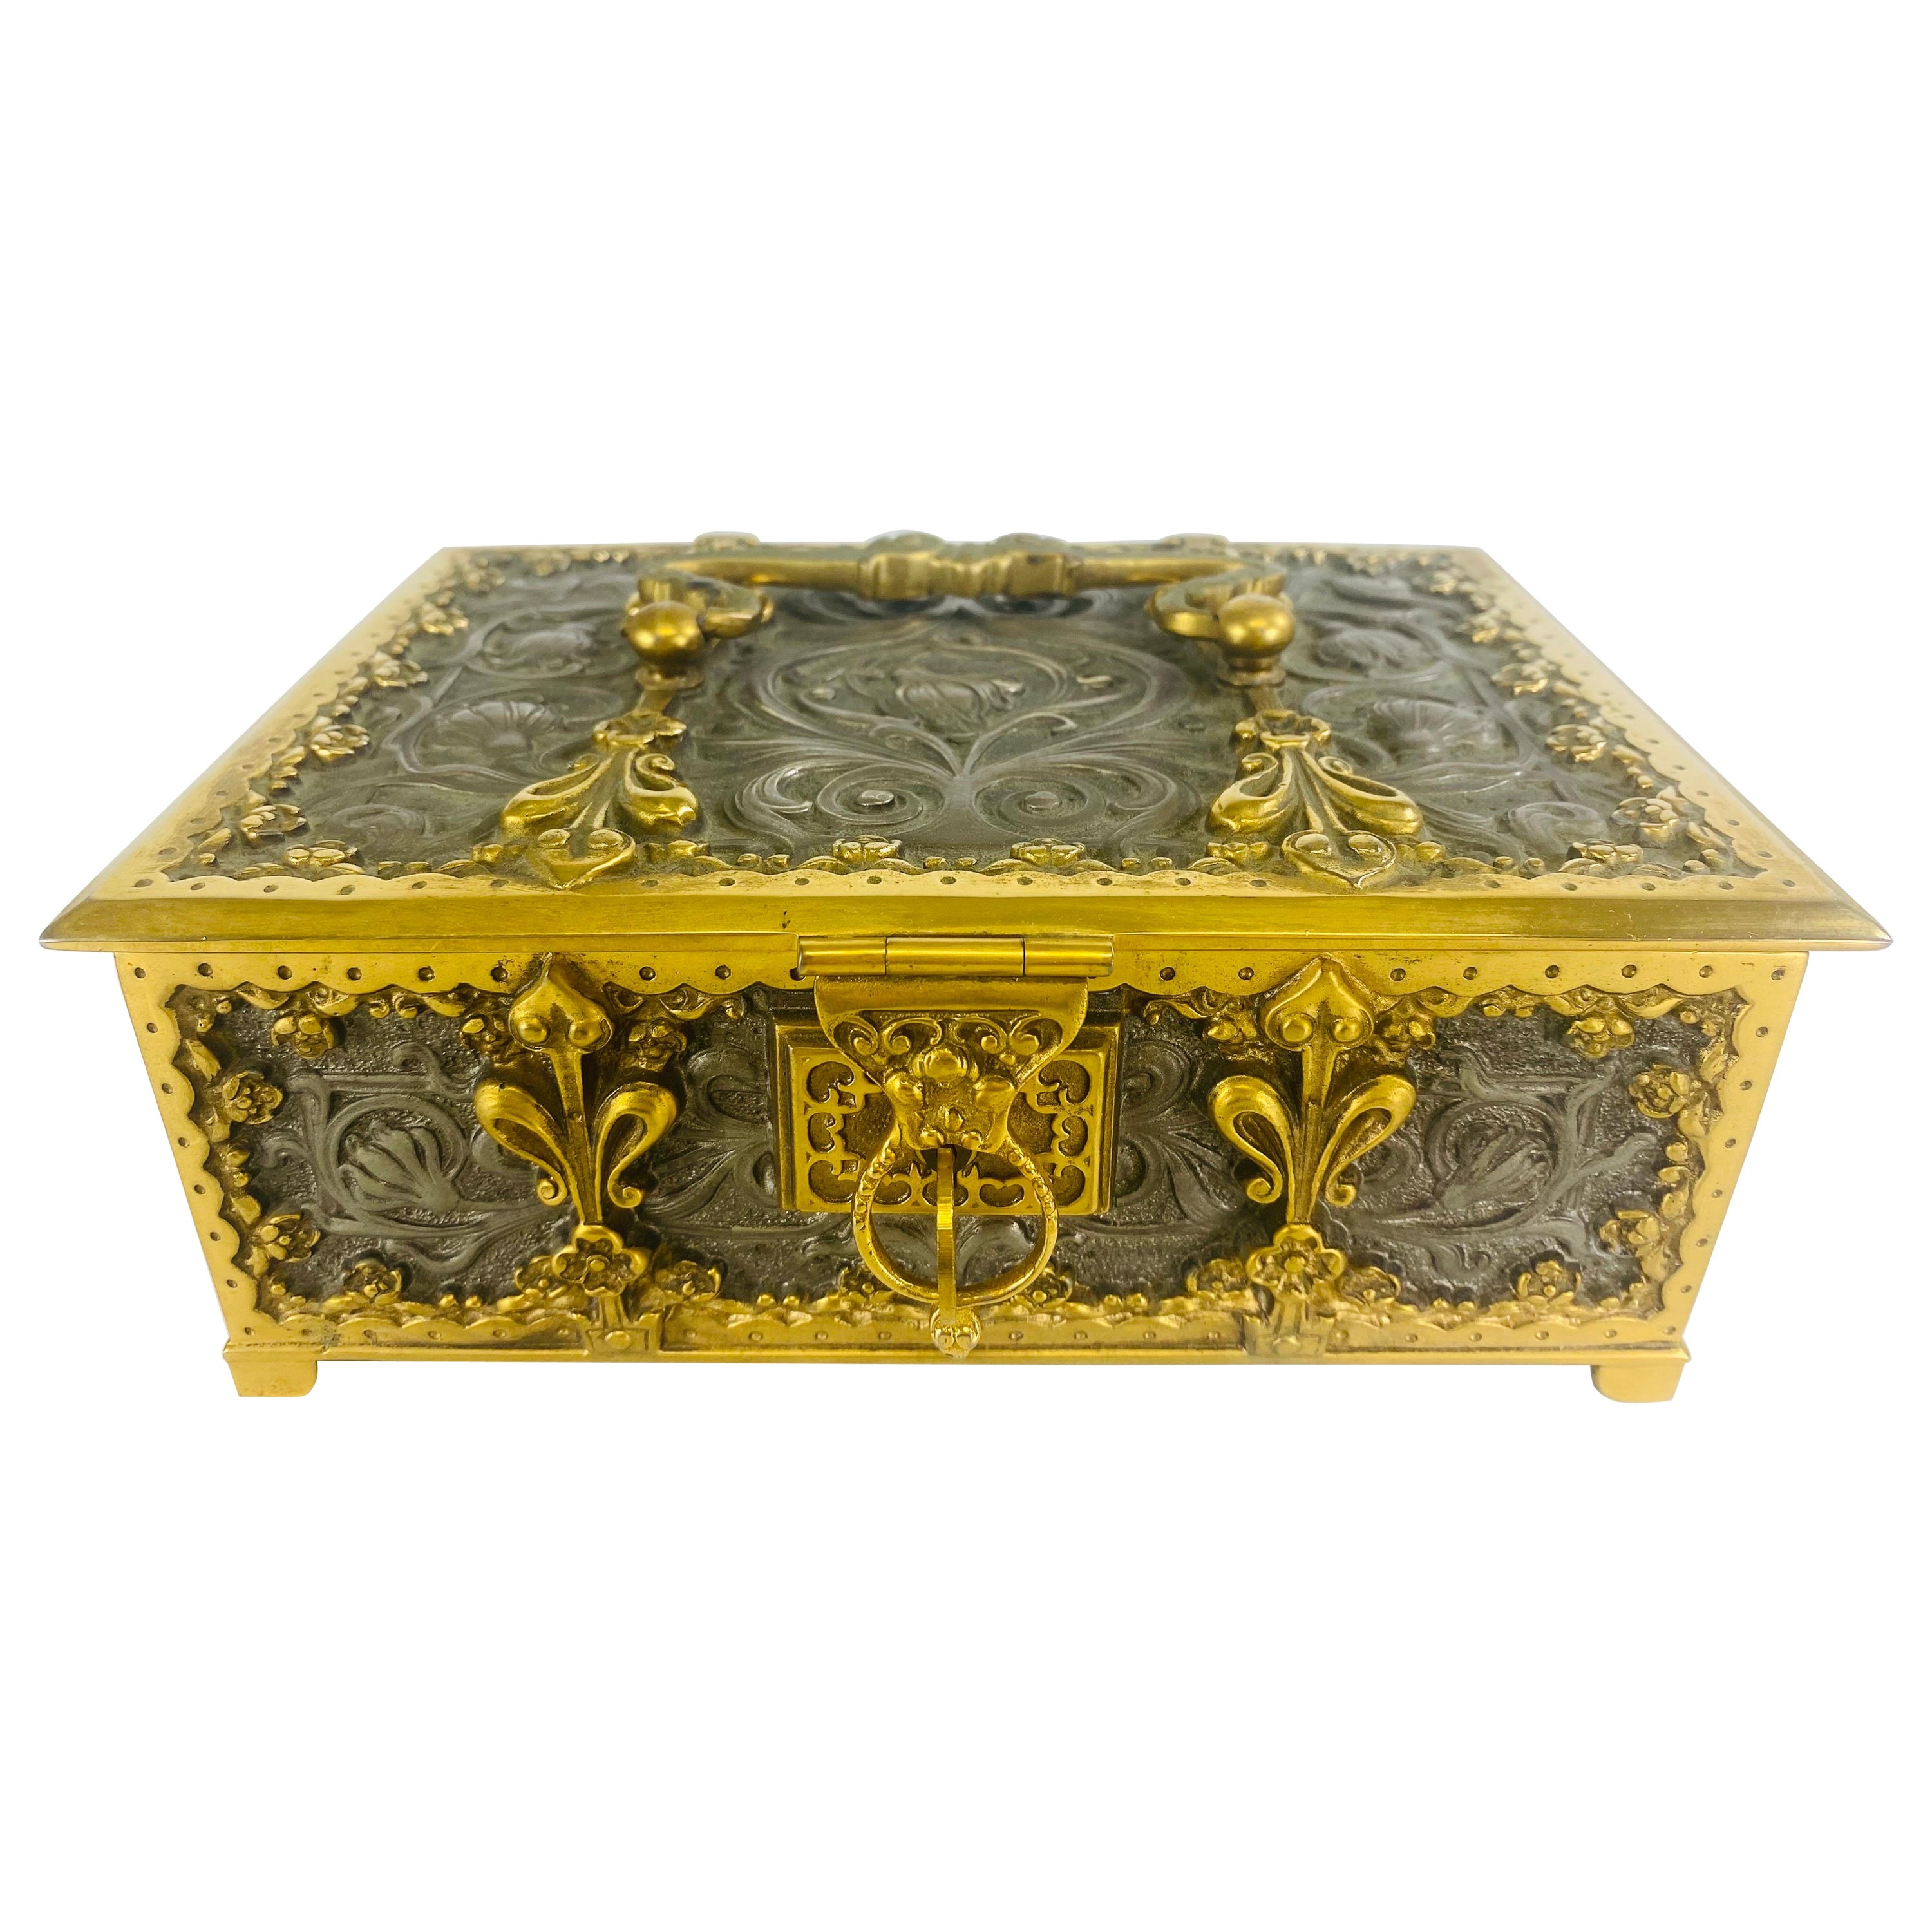 Mid 20th century German art Nevo style polished steel and brass trinket box